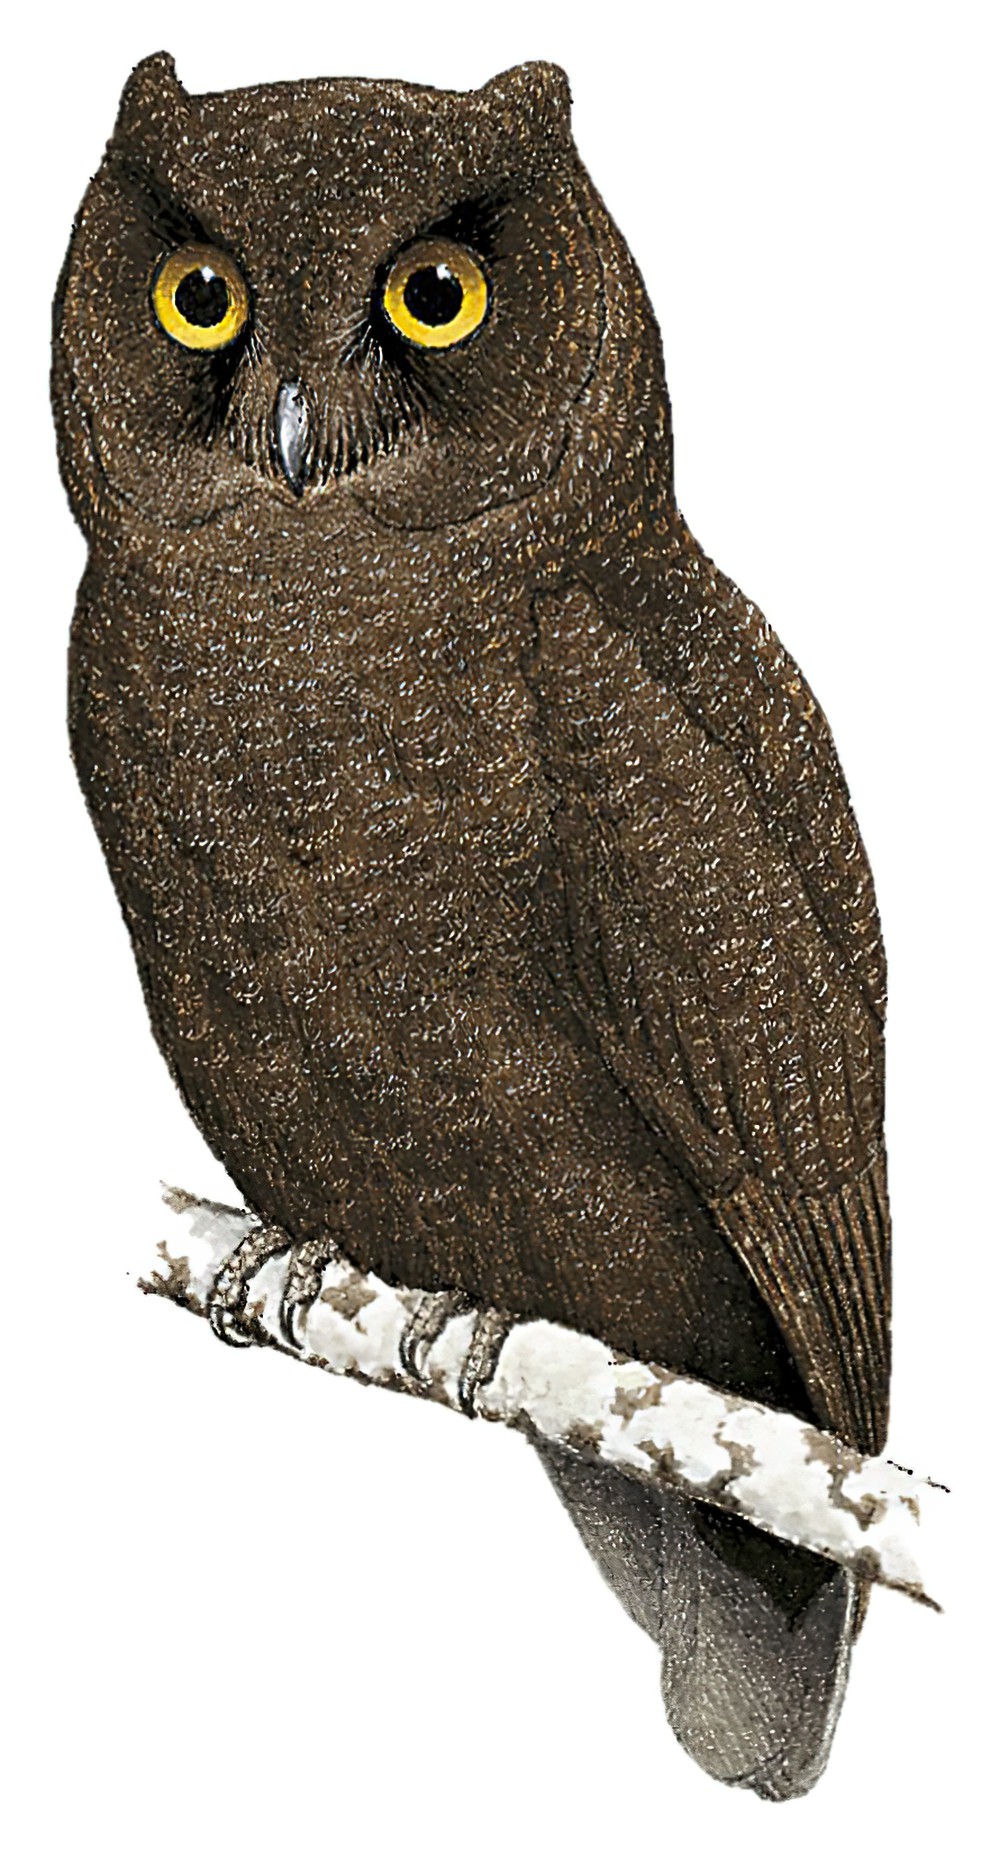 Anjouan Scops-Owl / Otus capnodes